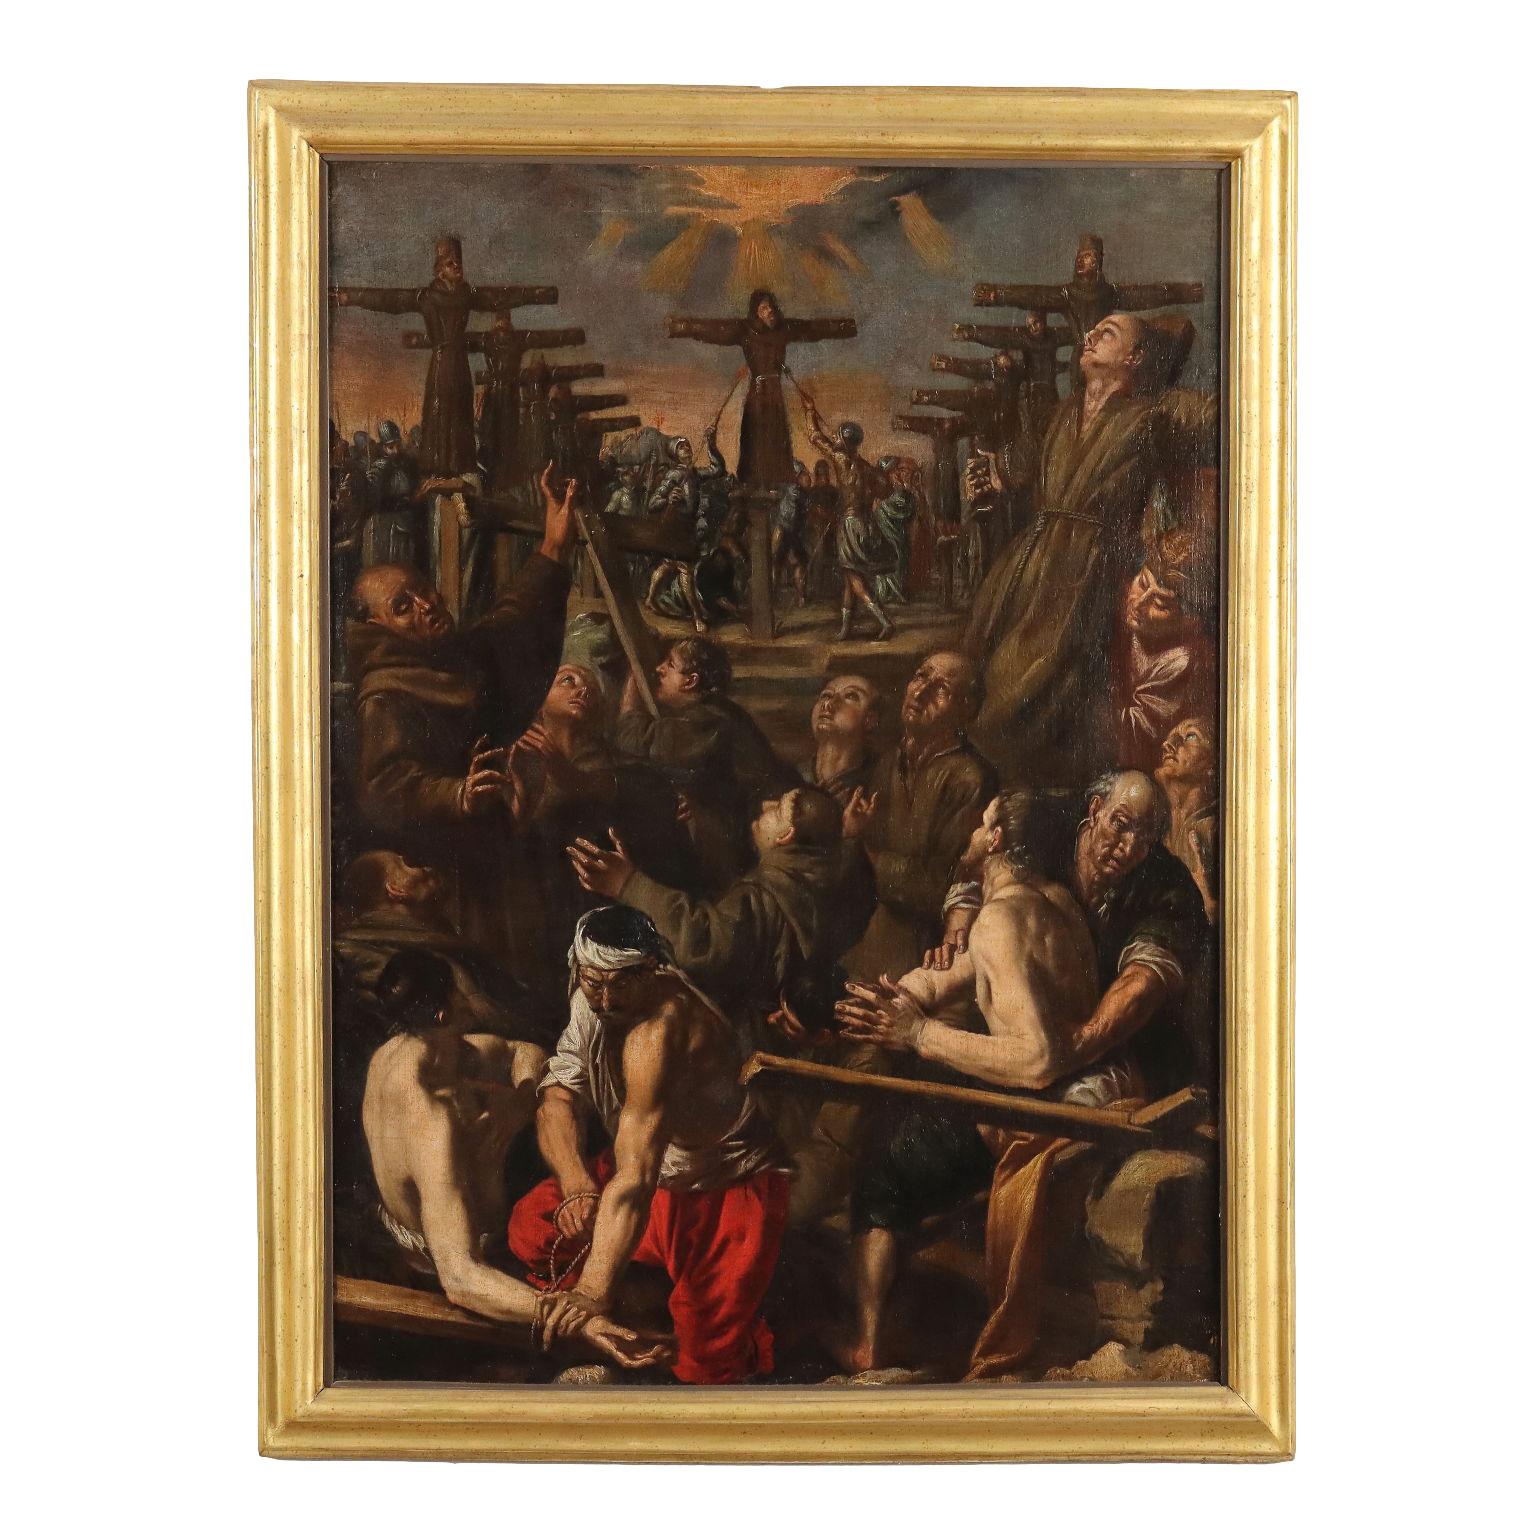 Tanzio da Varallo (Alagna Valsesia, c. 1582 - Varallo, 1633) Figurative Painting - Martyrdom of Franciscans in Nagasaki